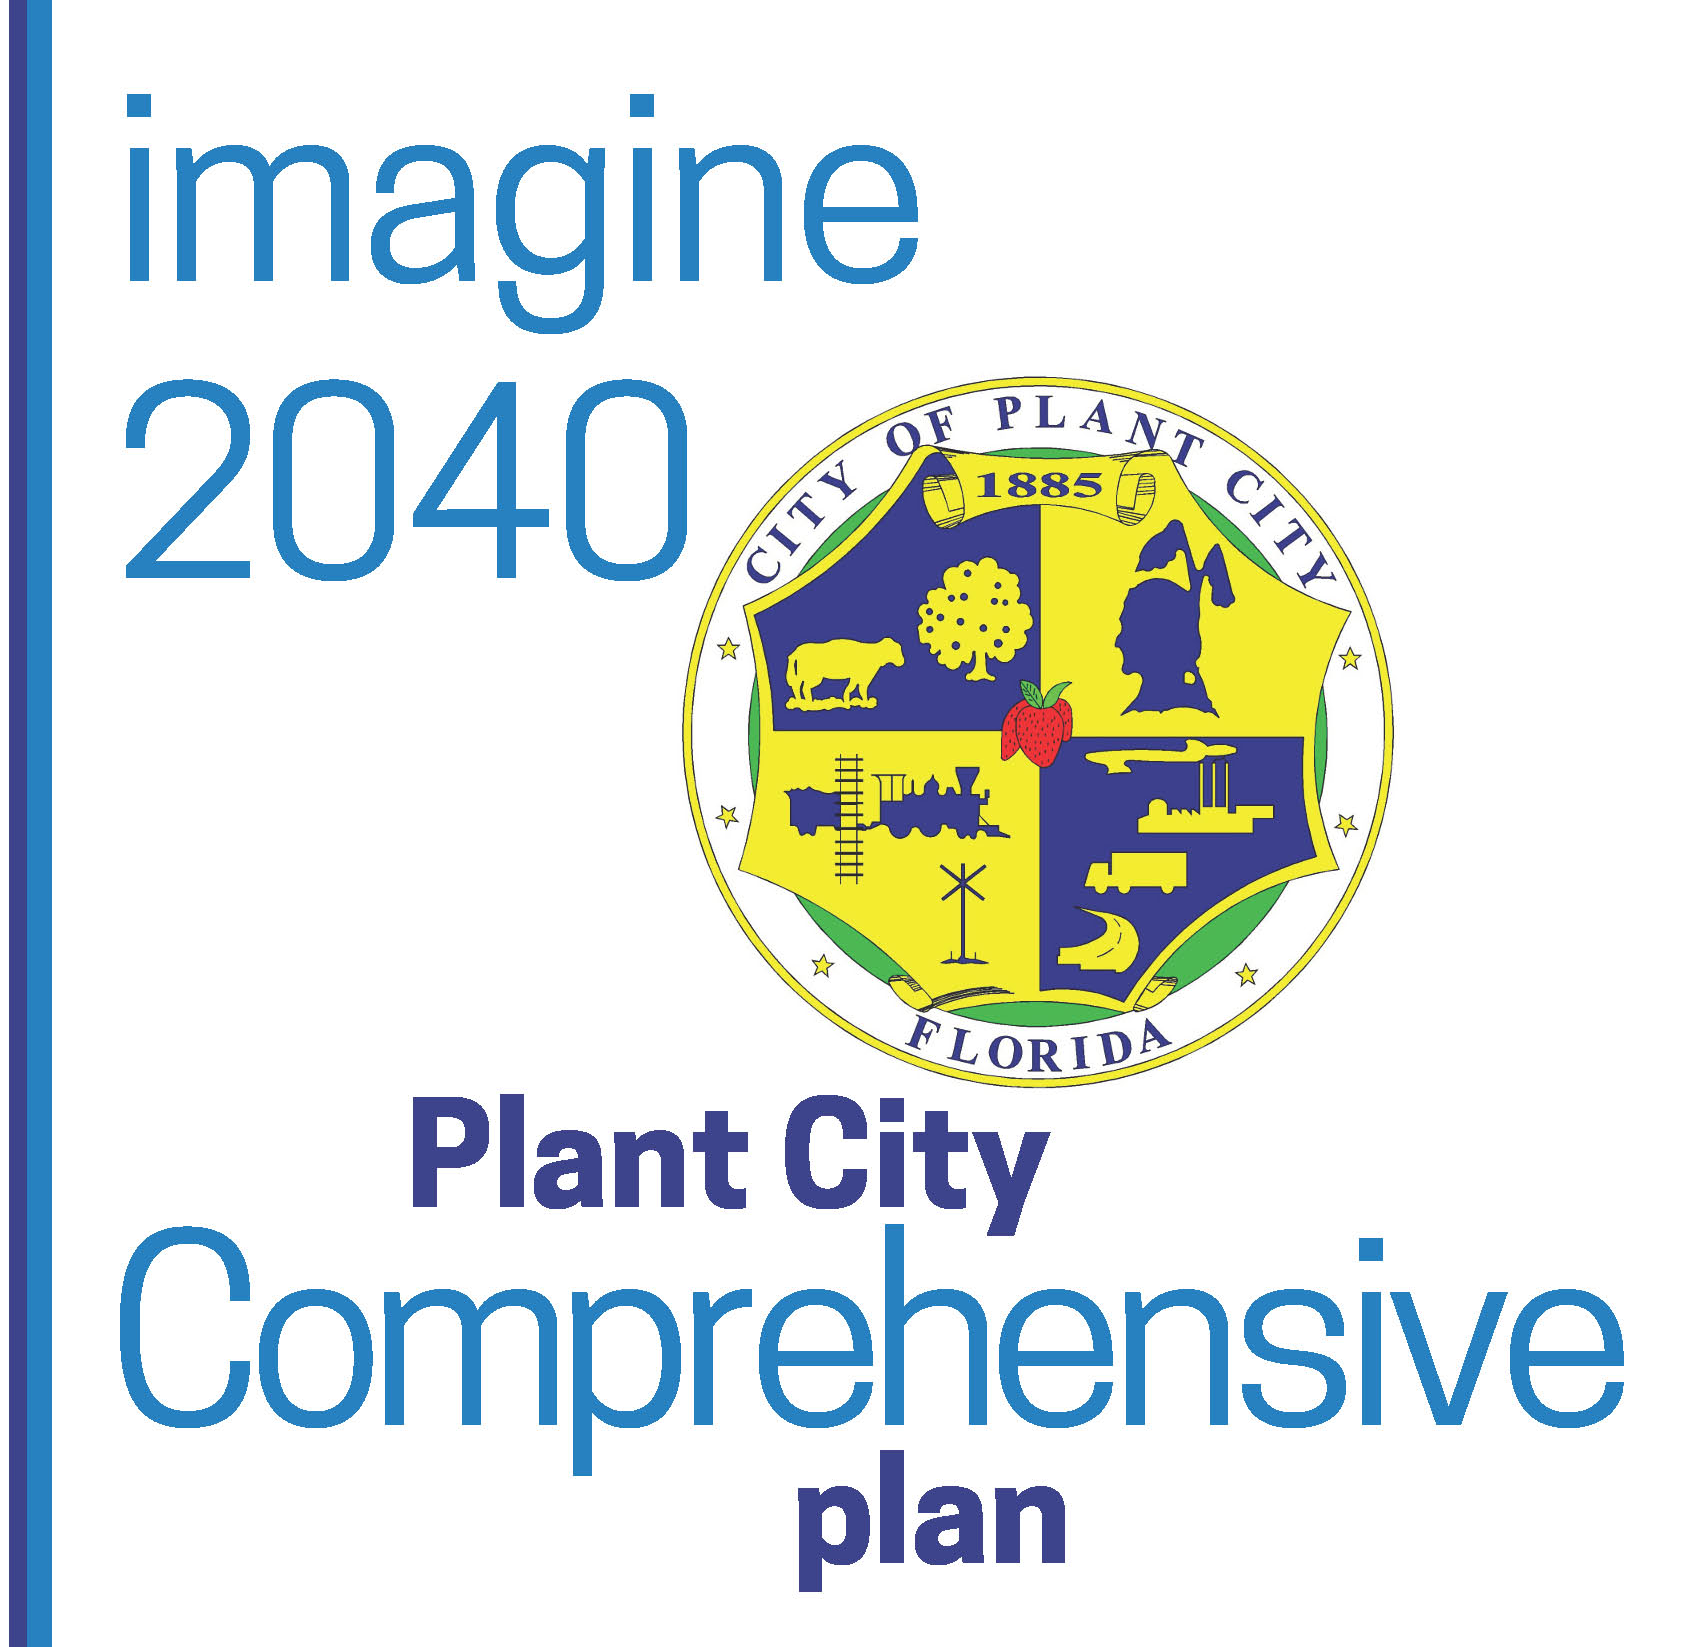 imagine 2040: Plant City Comprehensive Plan